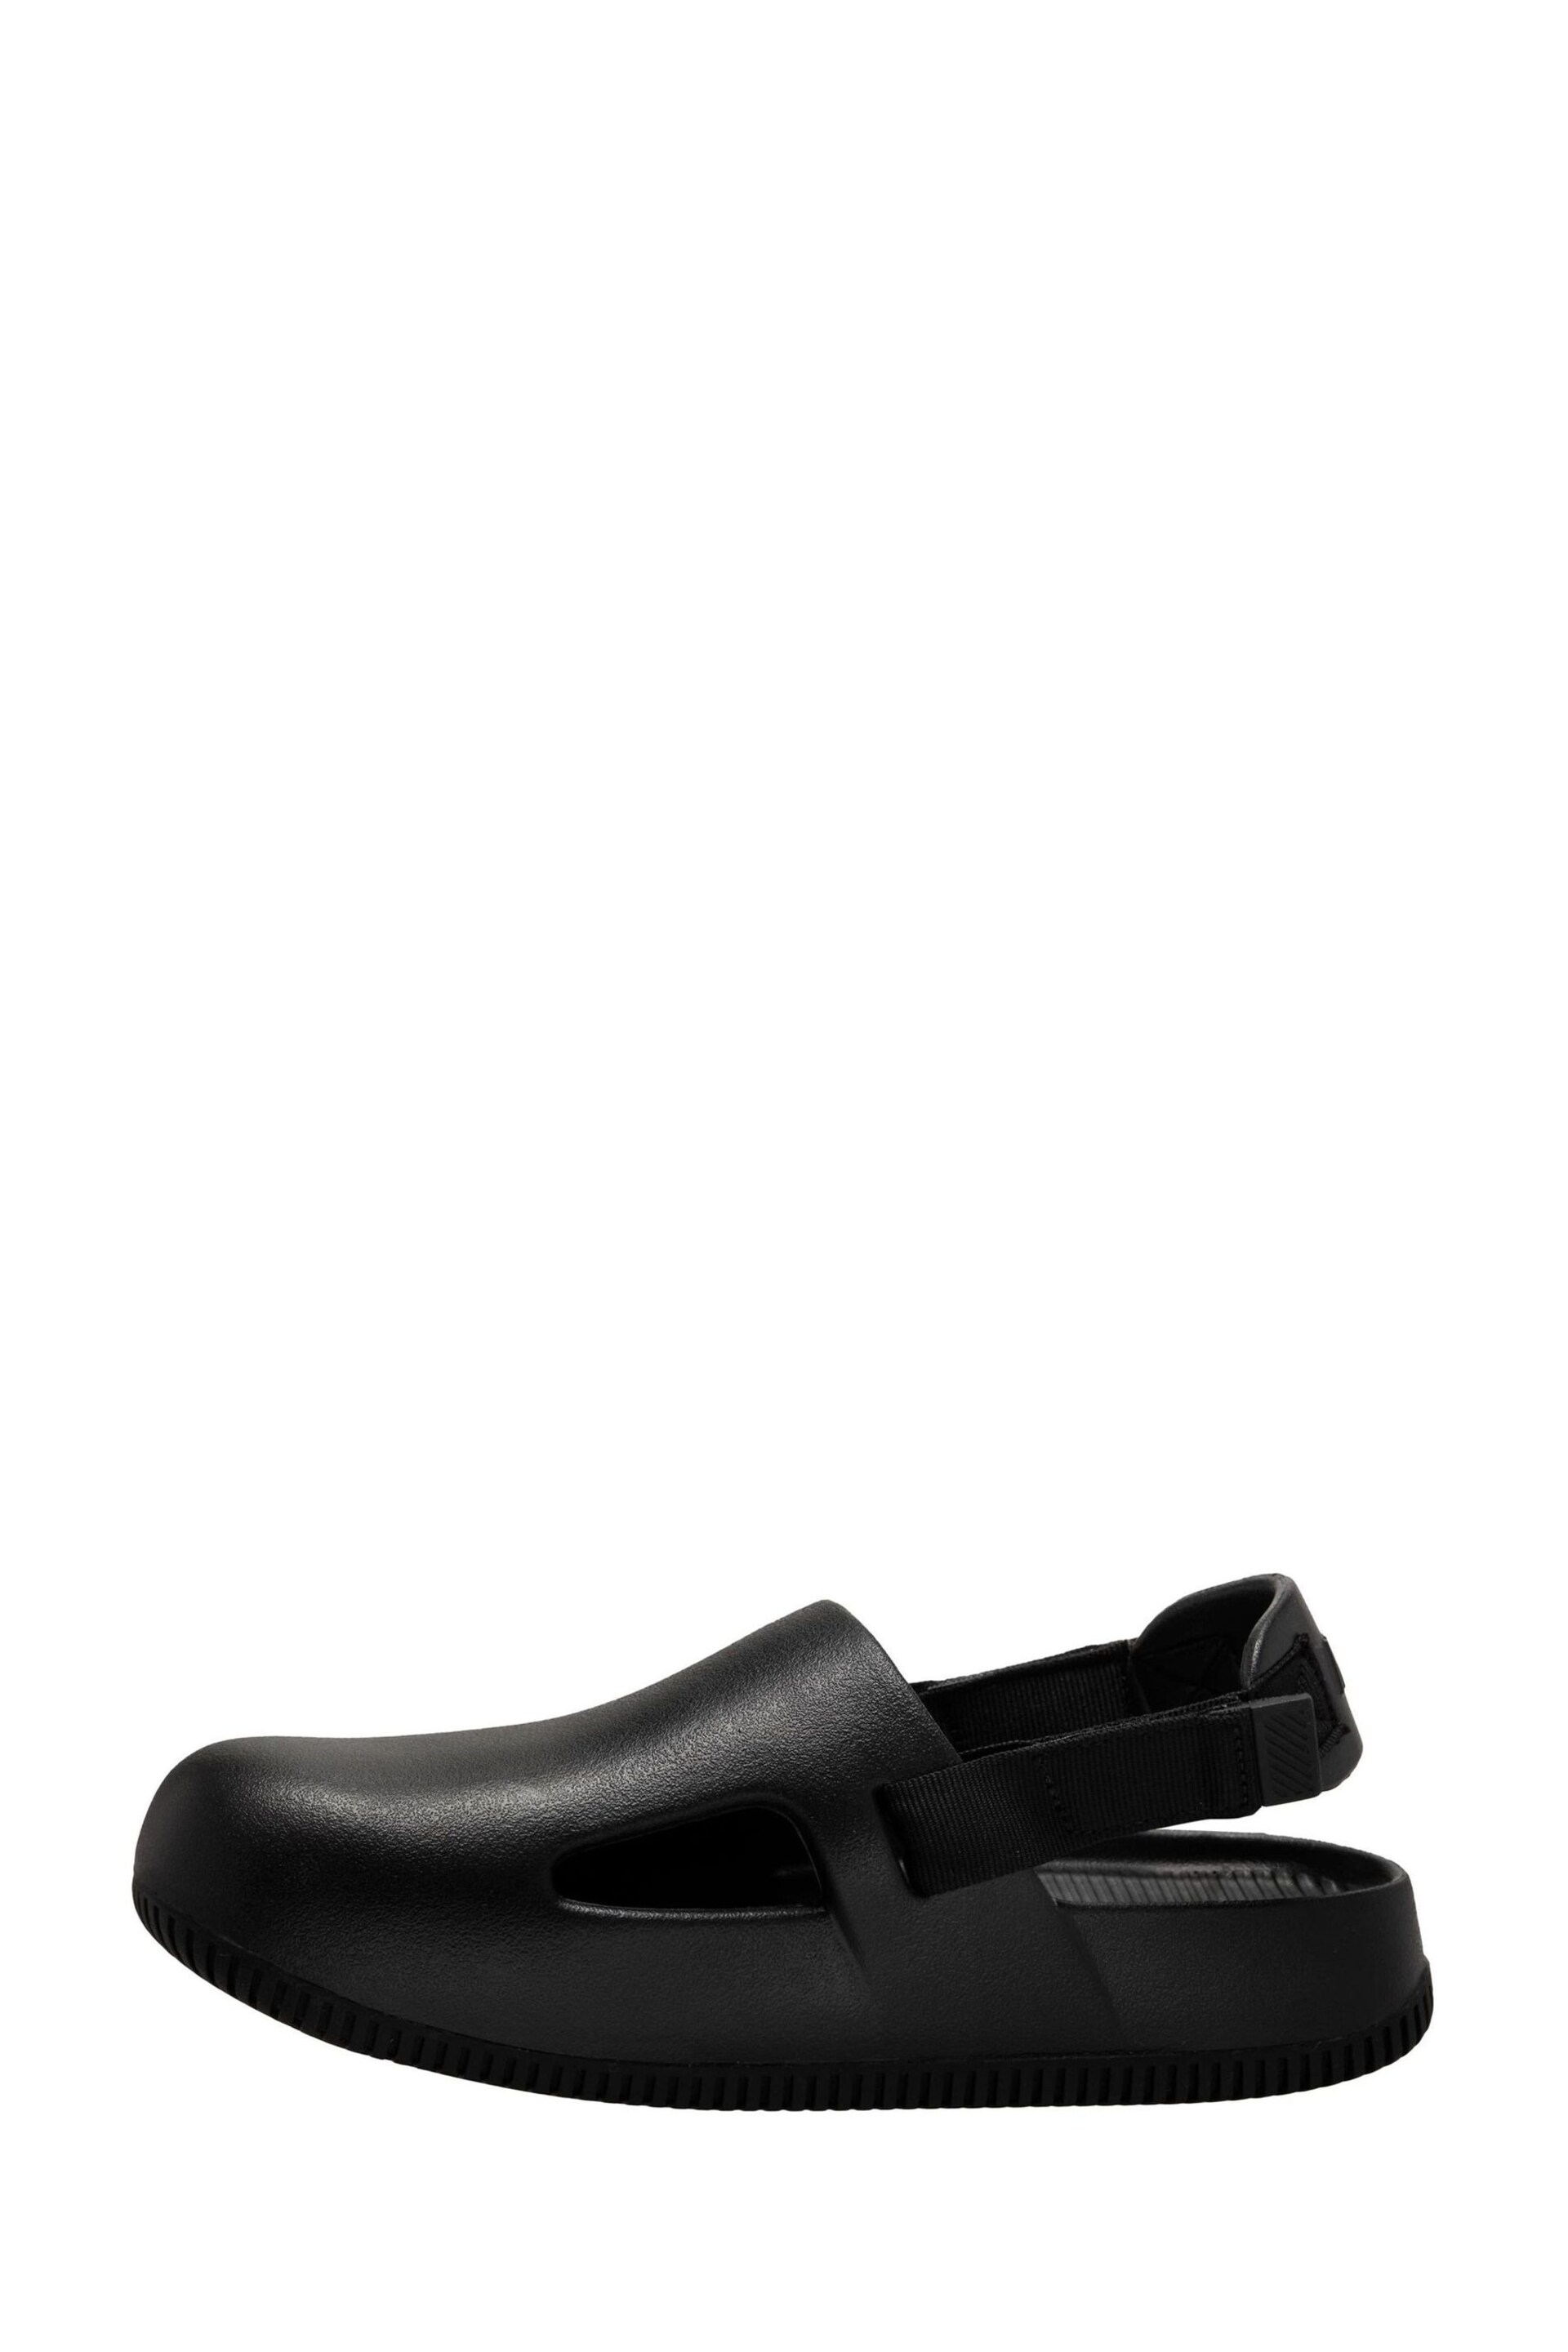 Nike Black Crome Calm Mule Sandals - Image 2 of 4